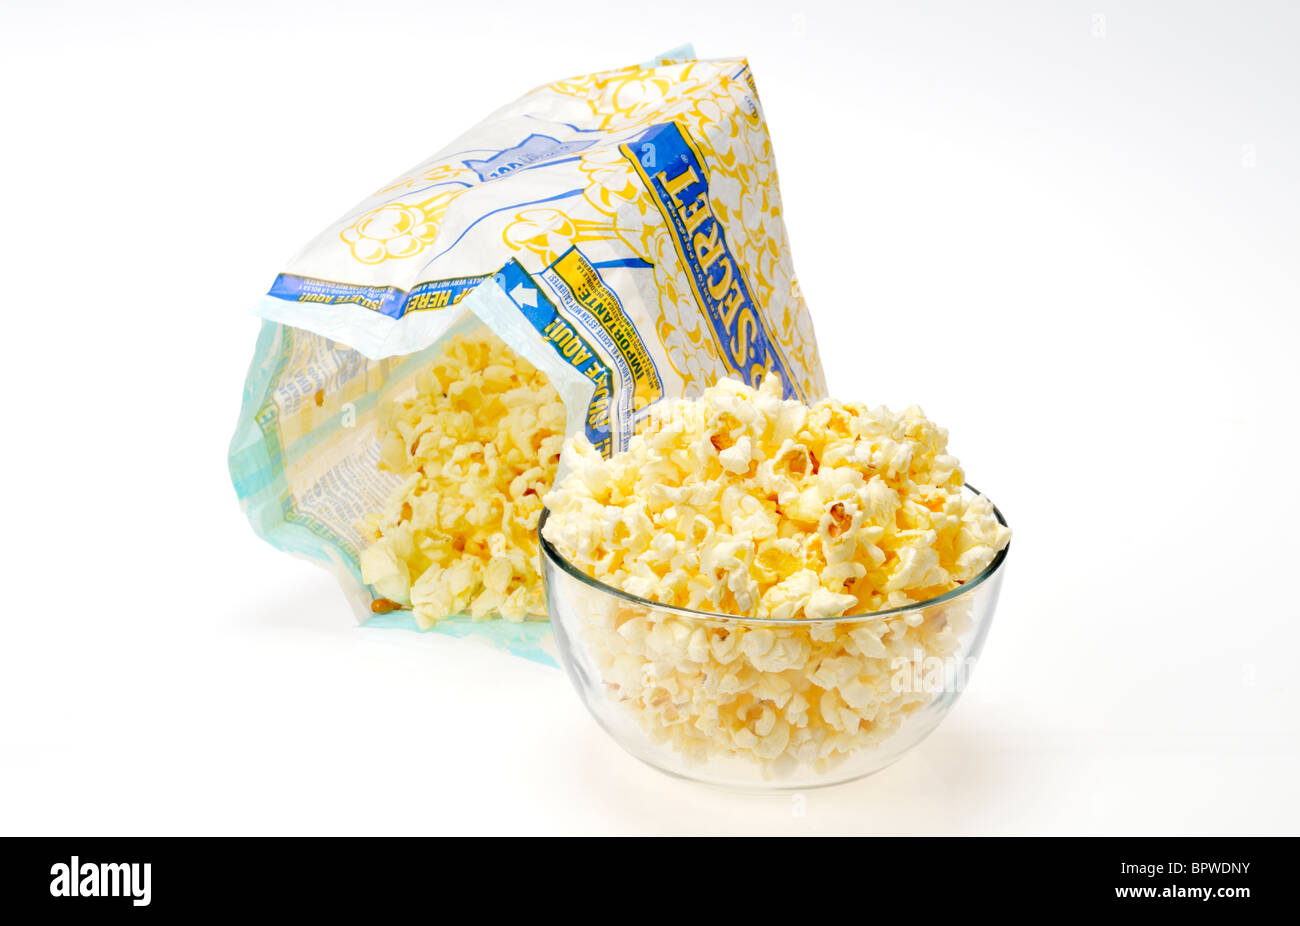 Abra la bolsa de Pop Secret palomitas de maíz para microondas con palomitas en el tazón de vidrio sobre fondo blanco, recorte. Foto de stock